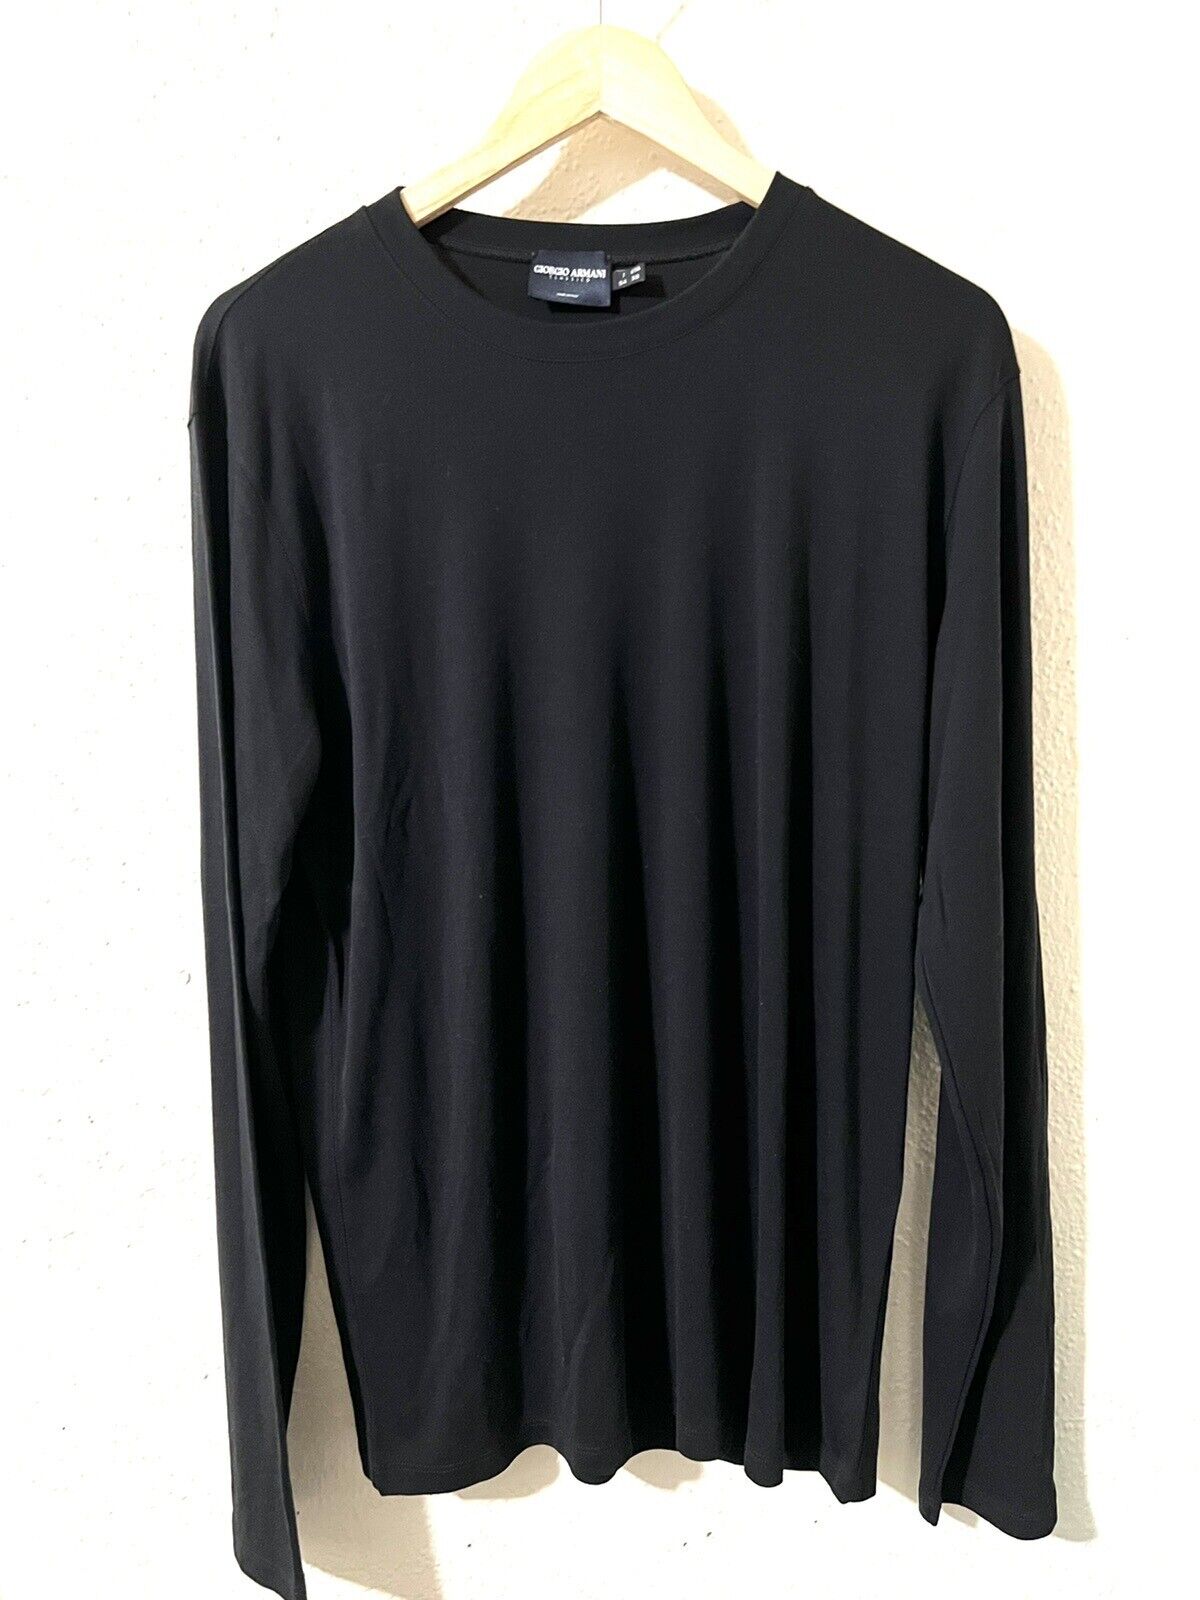 Giorgio Armani Made In Italy Black Long Sleeve T-Shirt US Size 38